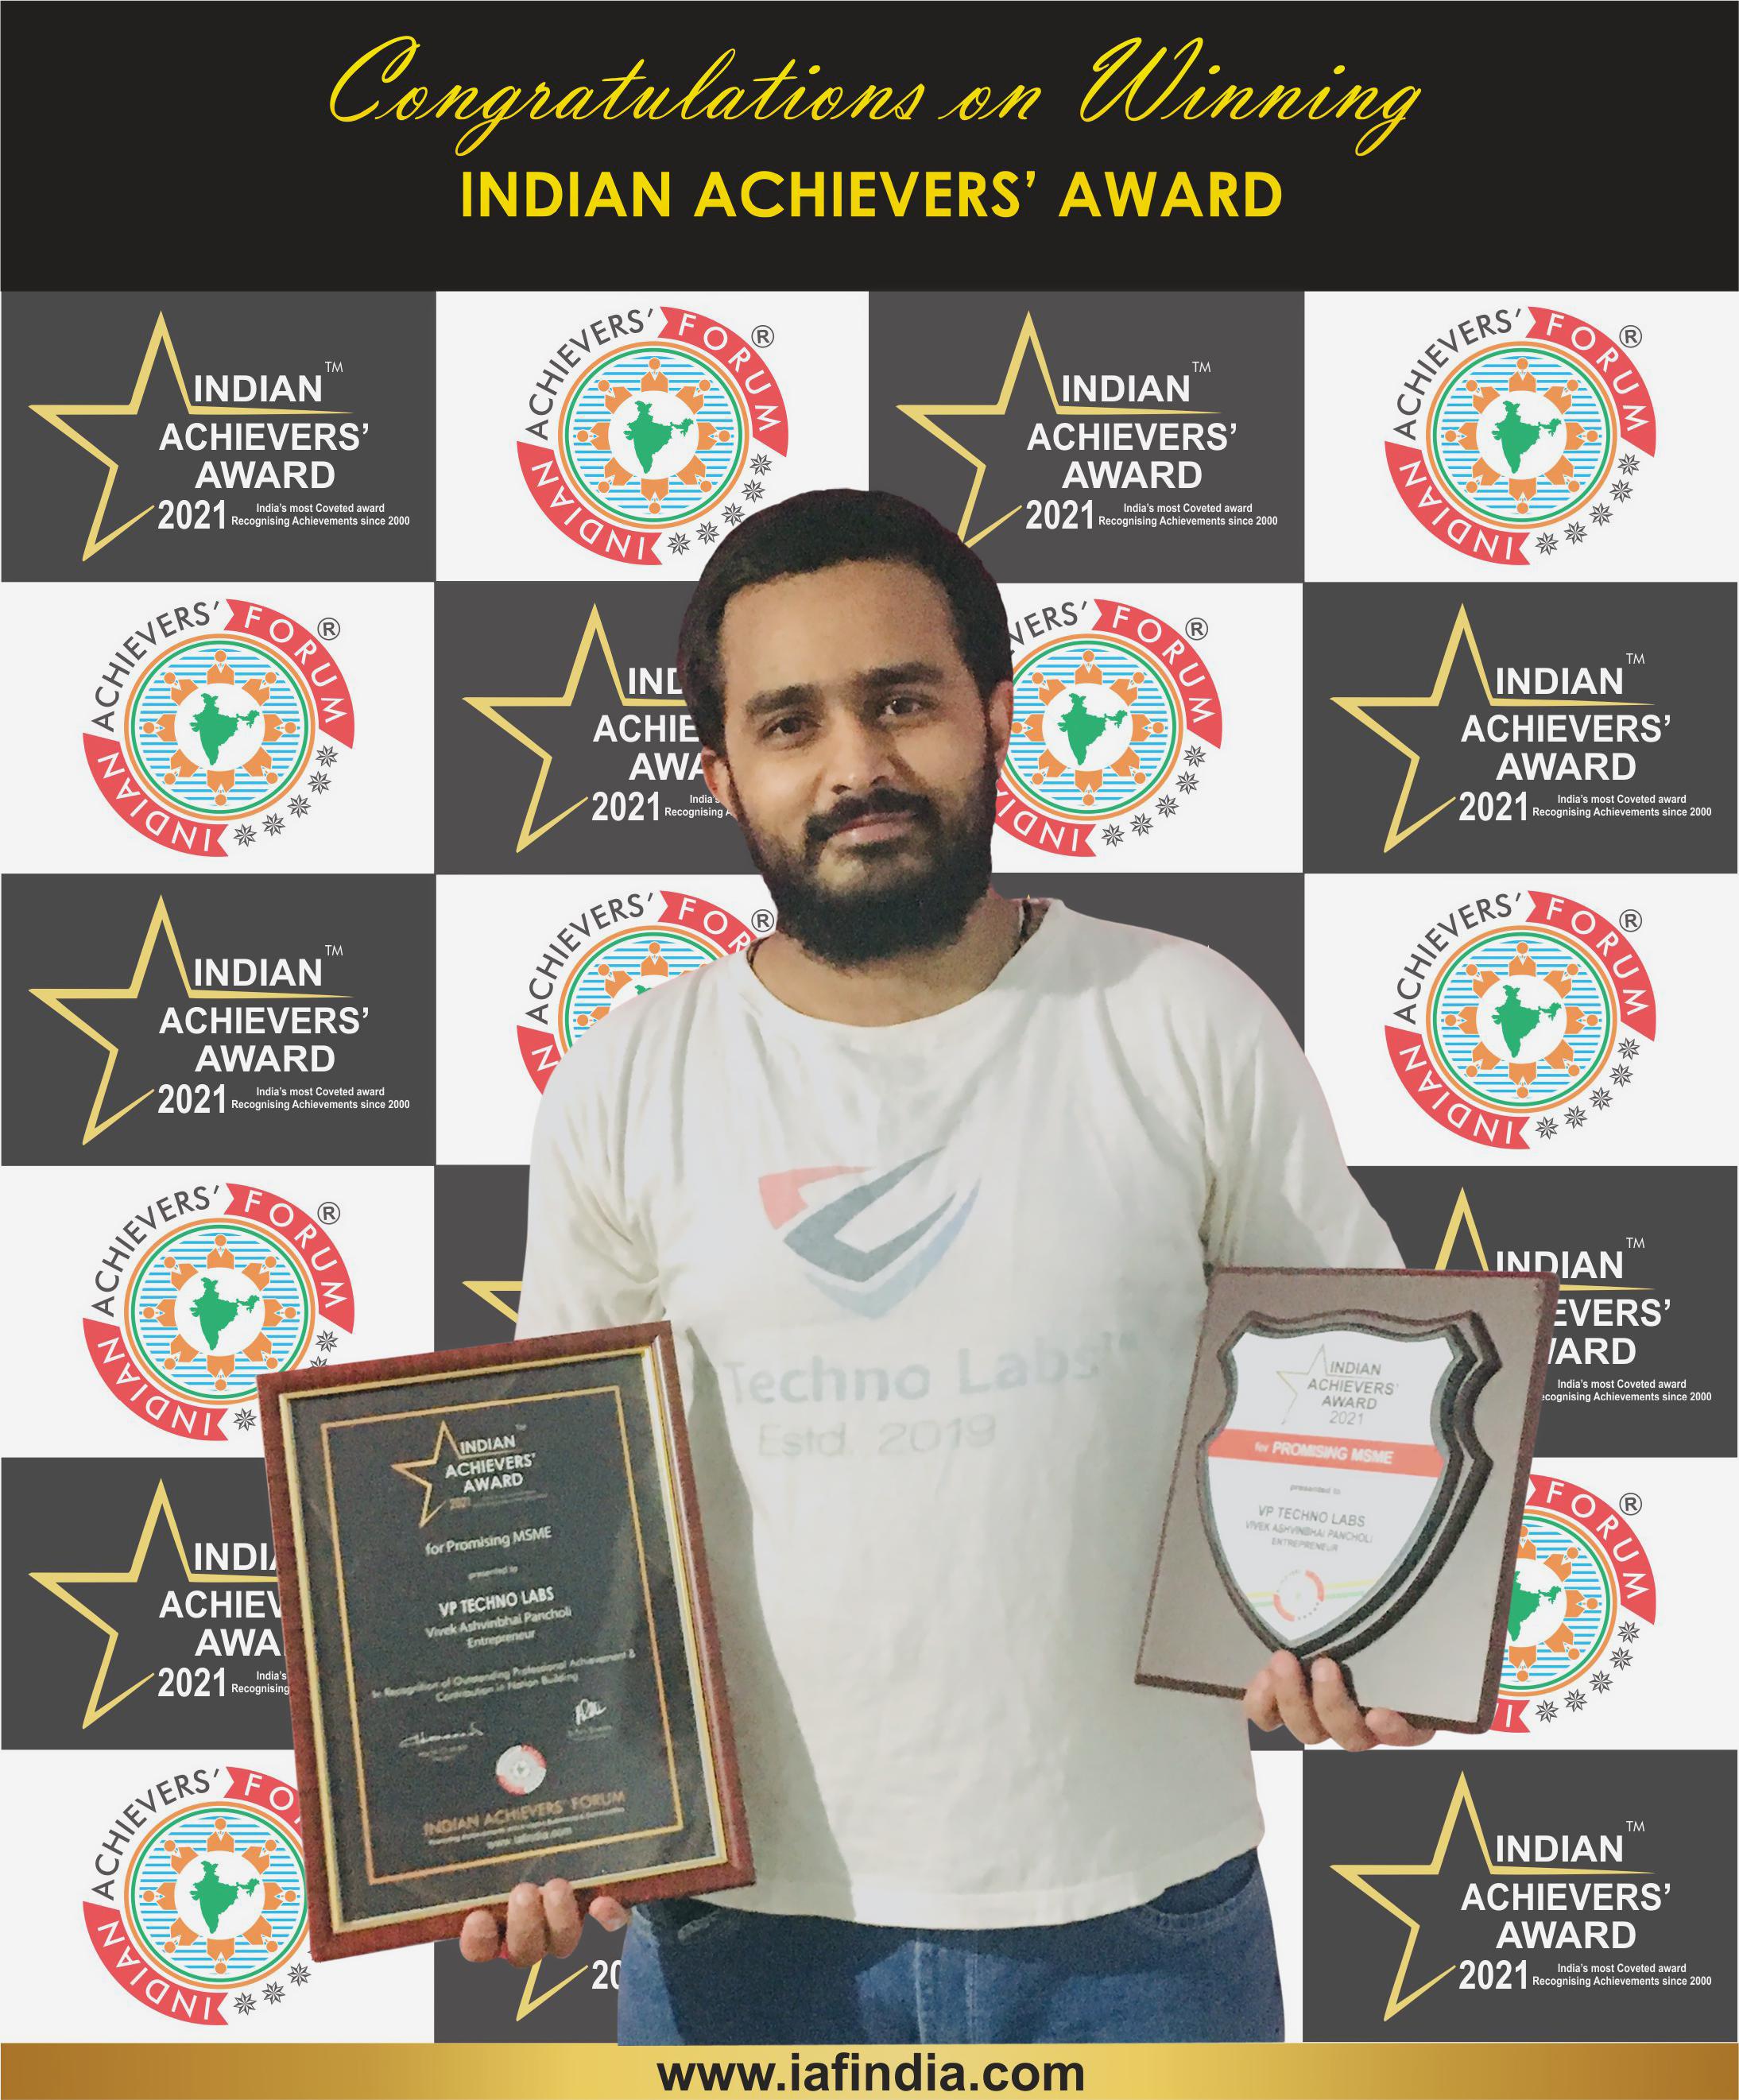 Vivek Pancholi - award winning at India Achievers' Awards